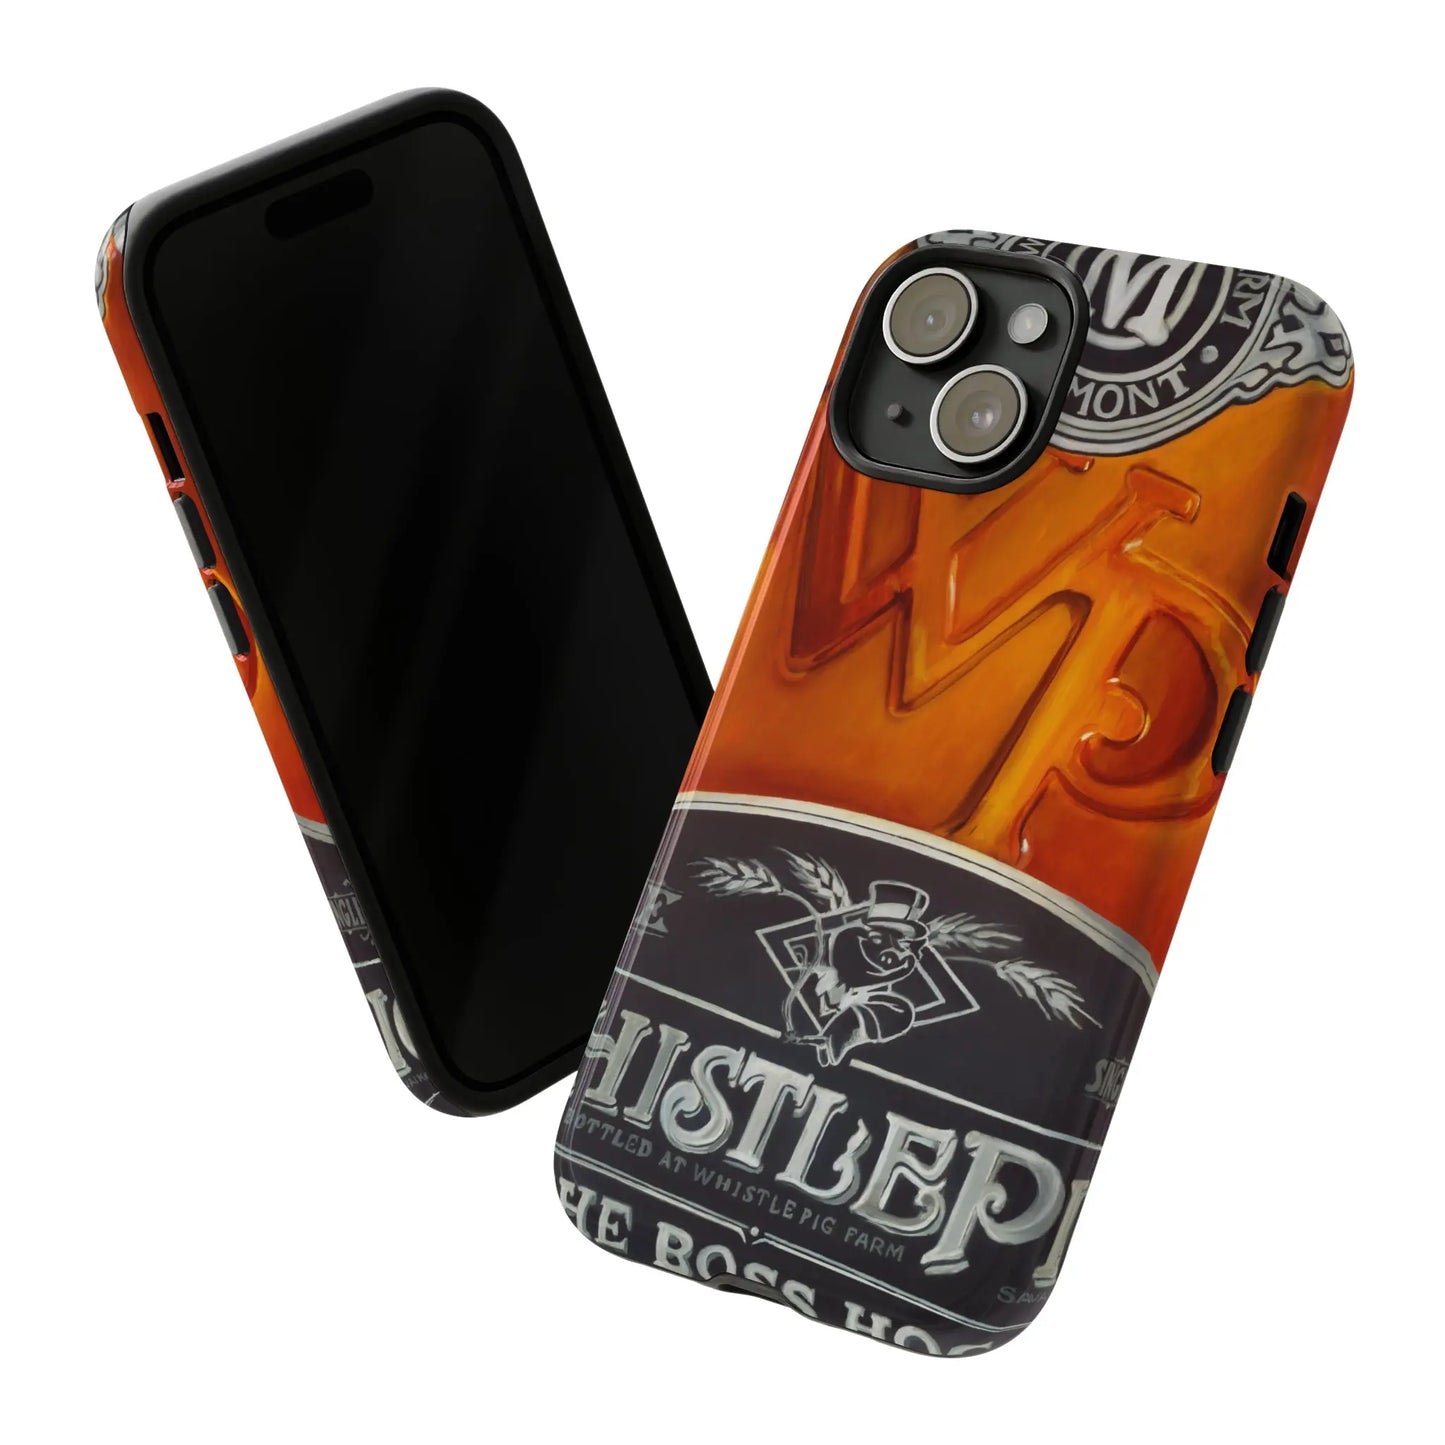 Savaiko Art - Whistle Pig Boss Hog II Close up Tough Phone case - Max Savaiko Art